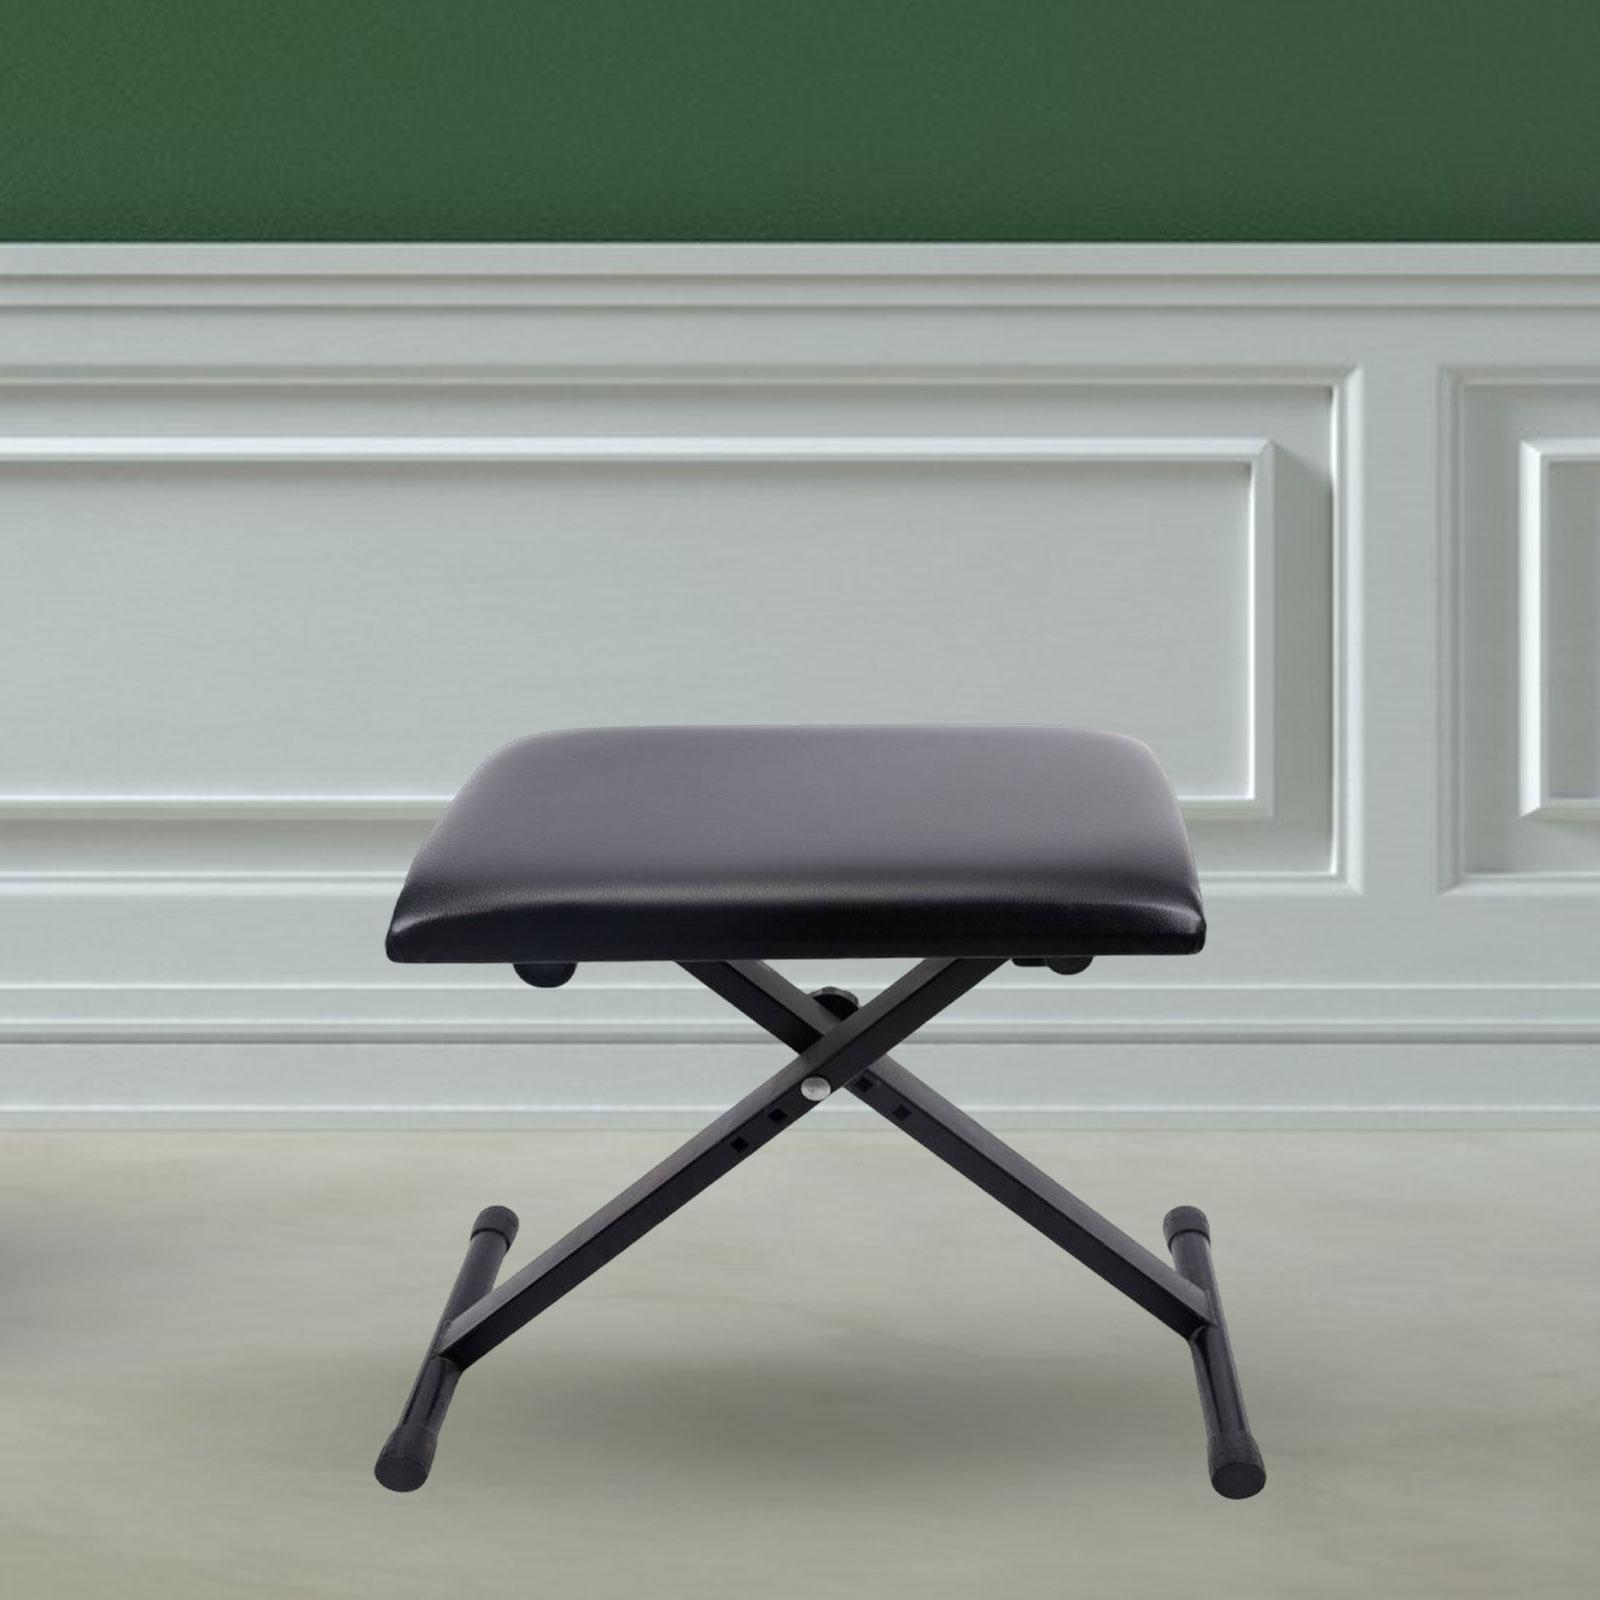 Portable Arm Leg Rest Stand Supplies Nonslip Tripod for Artist home